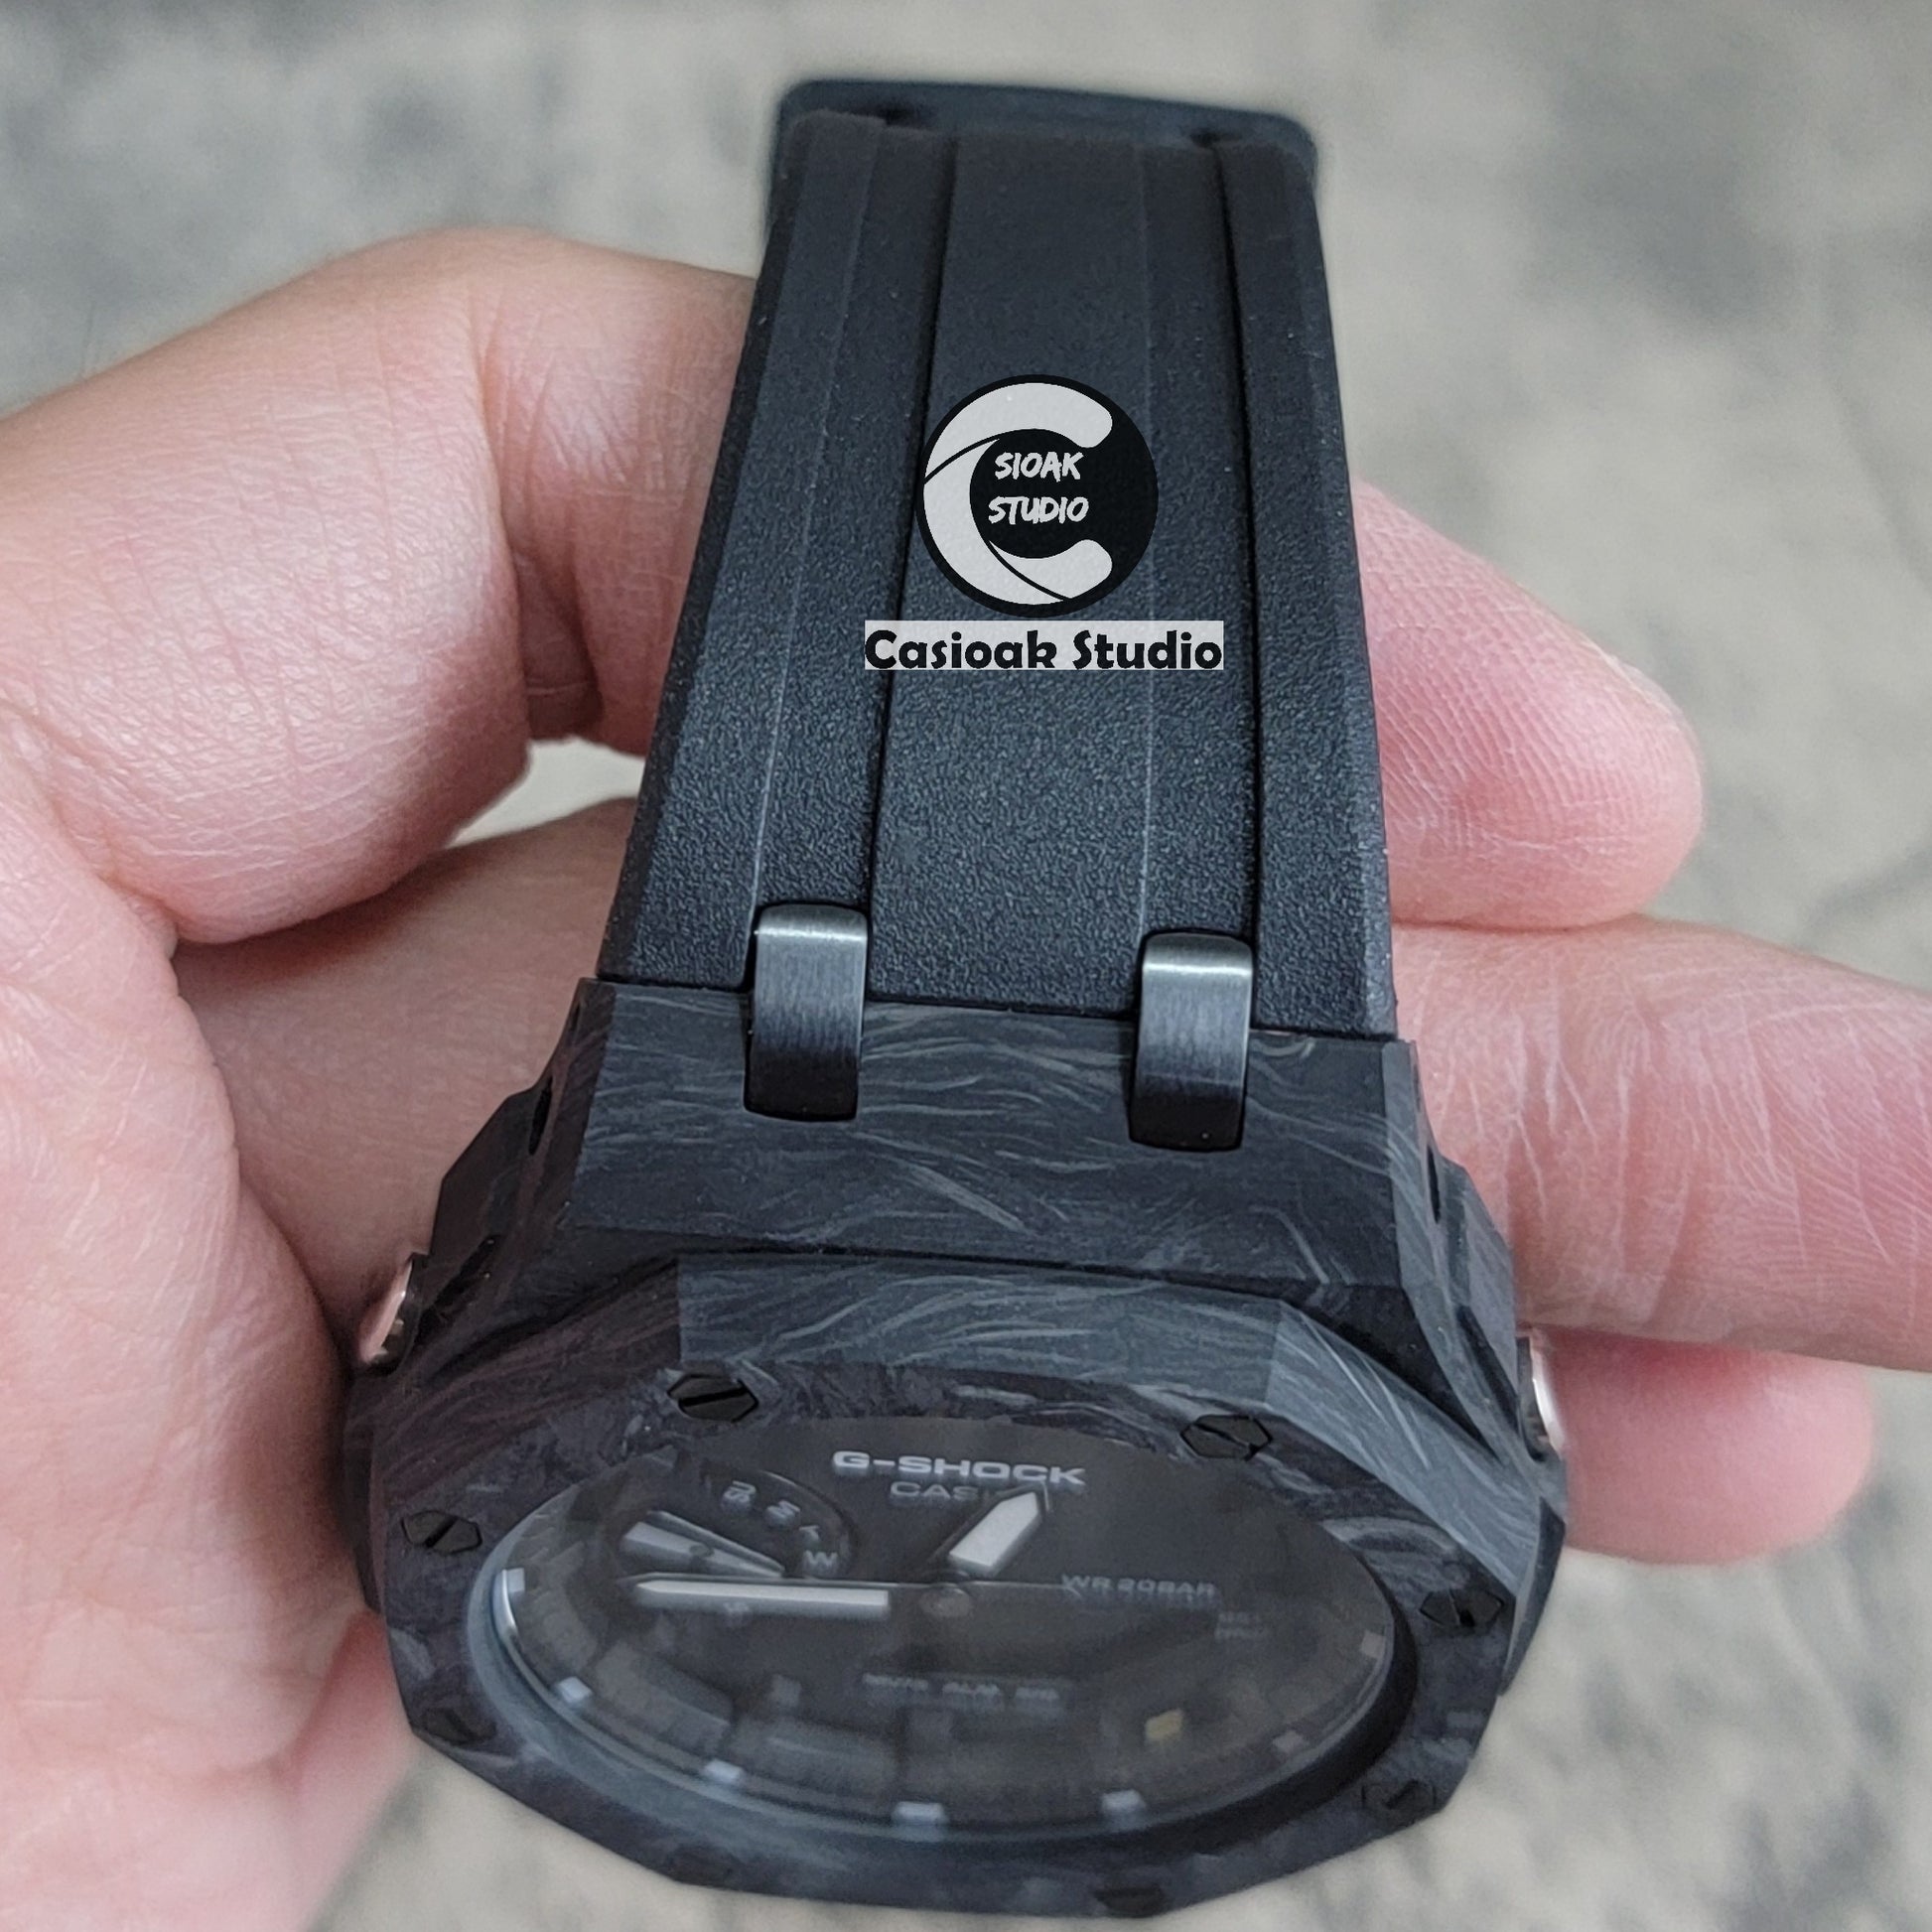 Casioak Mod Watch Carbon Fiber Offshore Superior Black Case Black Strap Black Time Mark Black Dial 44mm - Casioak Studio